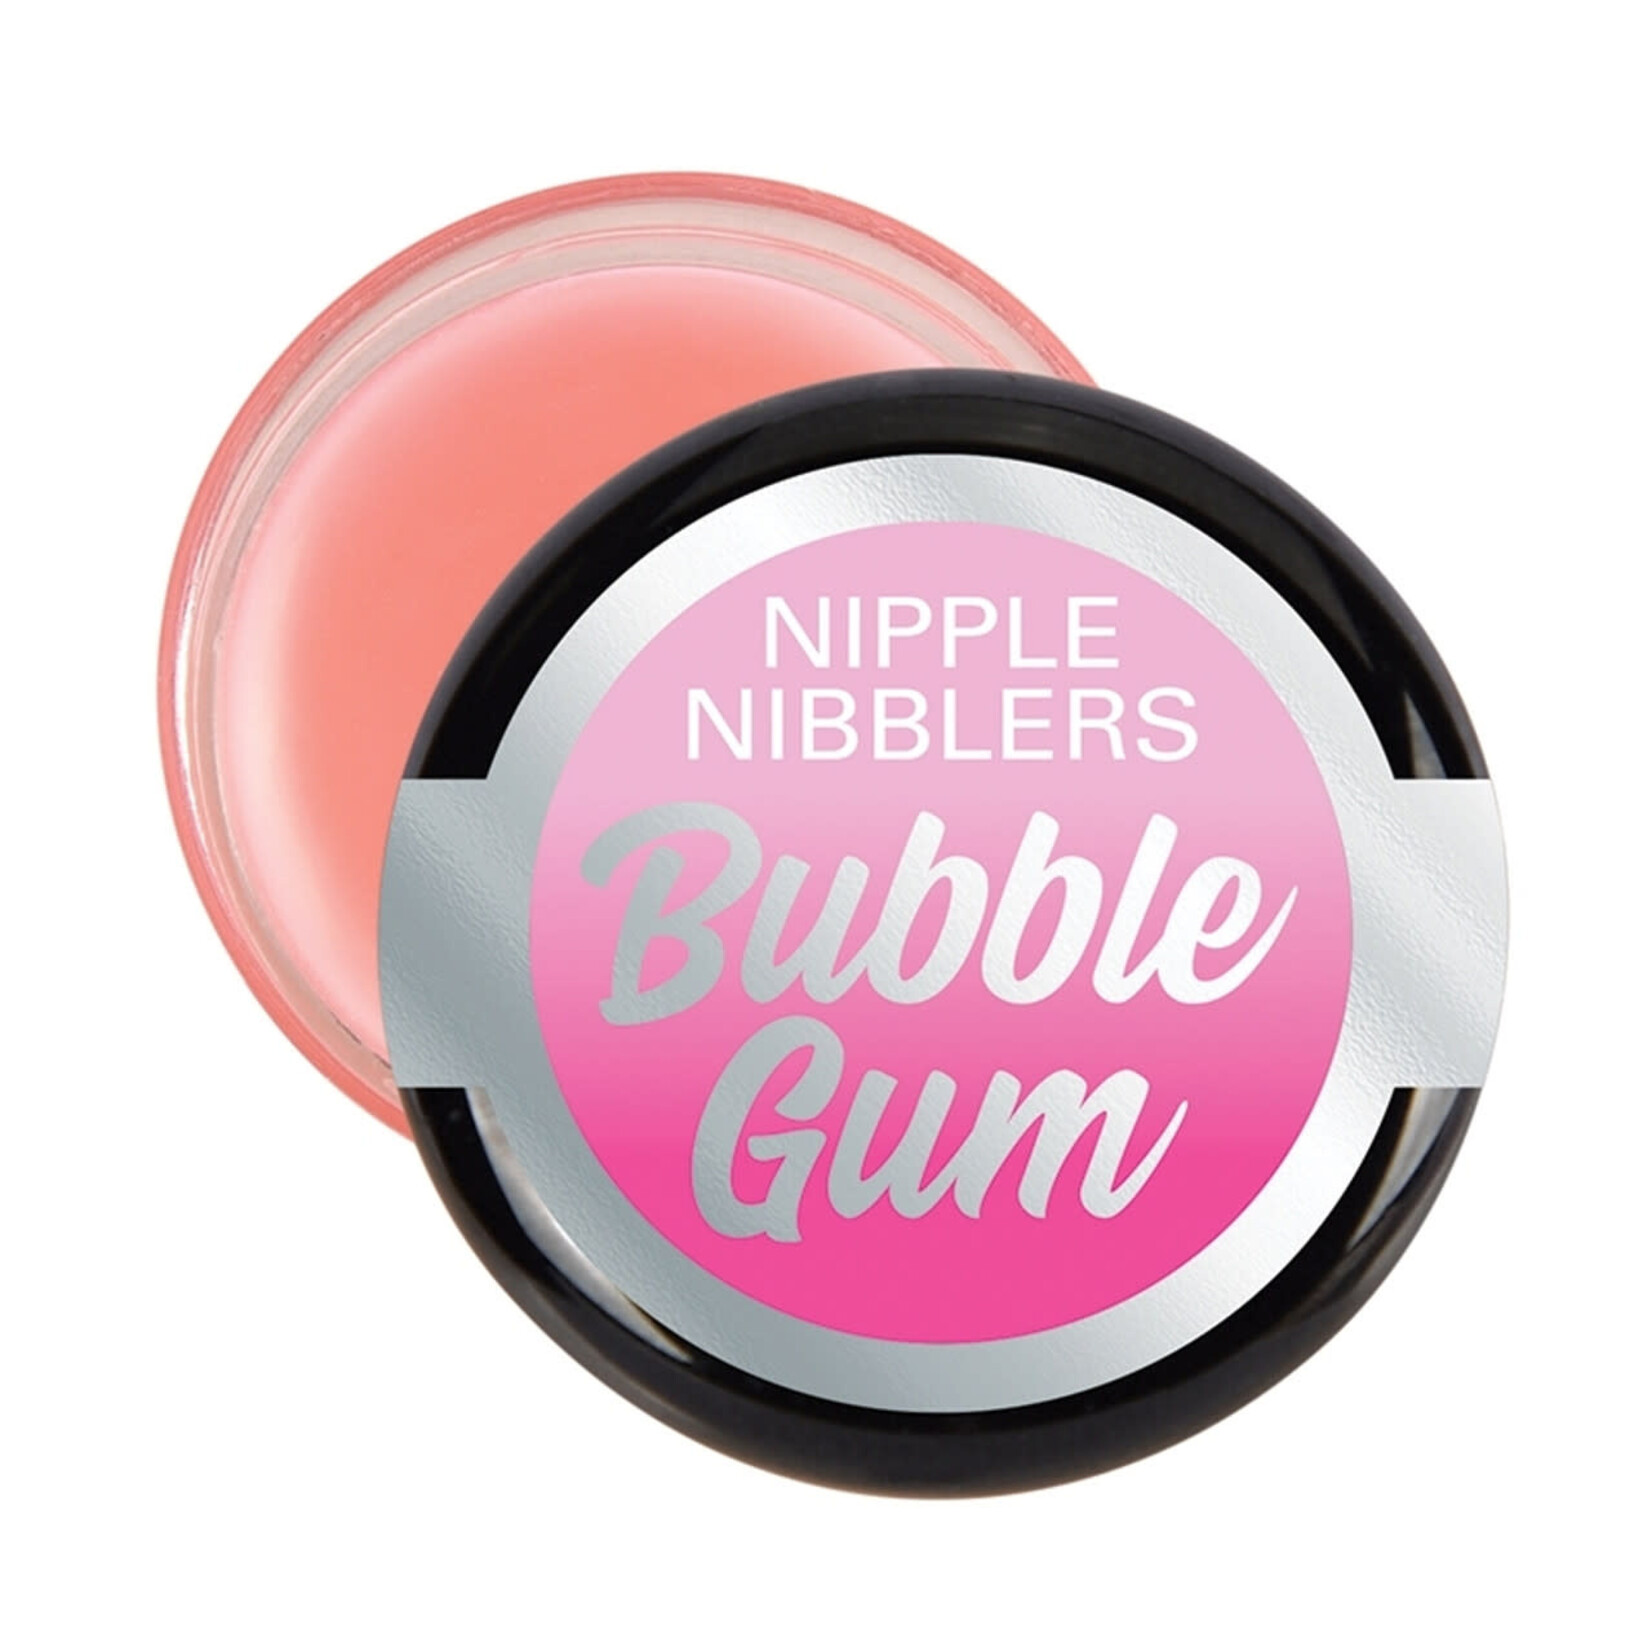 NIPPLE NIBBLERS TINGLE BALM 3G - BUBBLE GUM